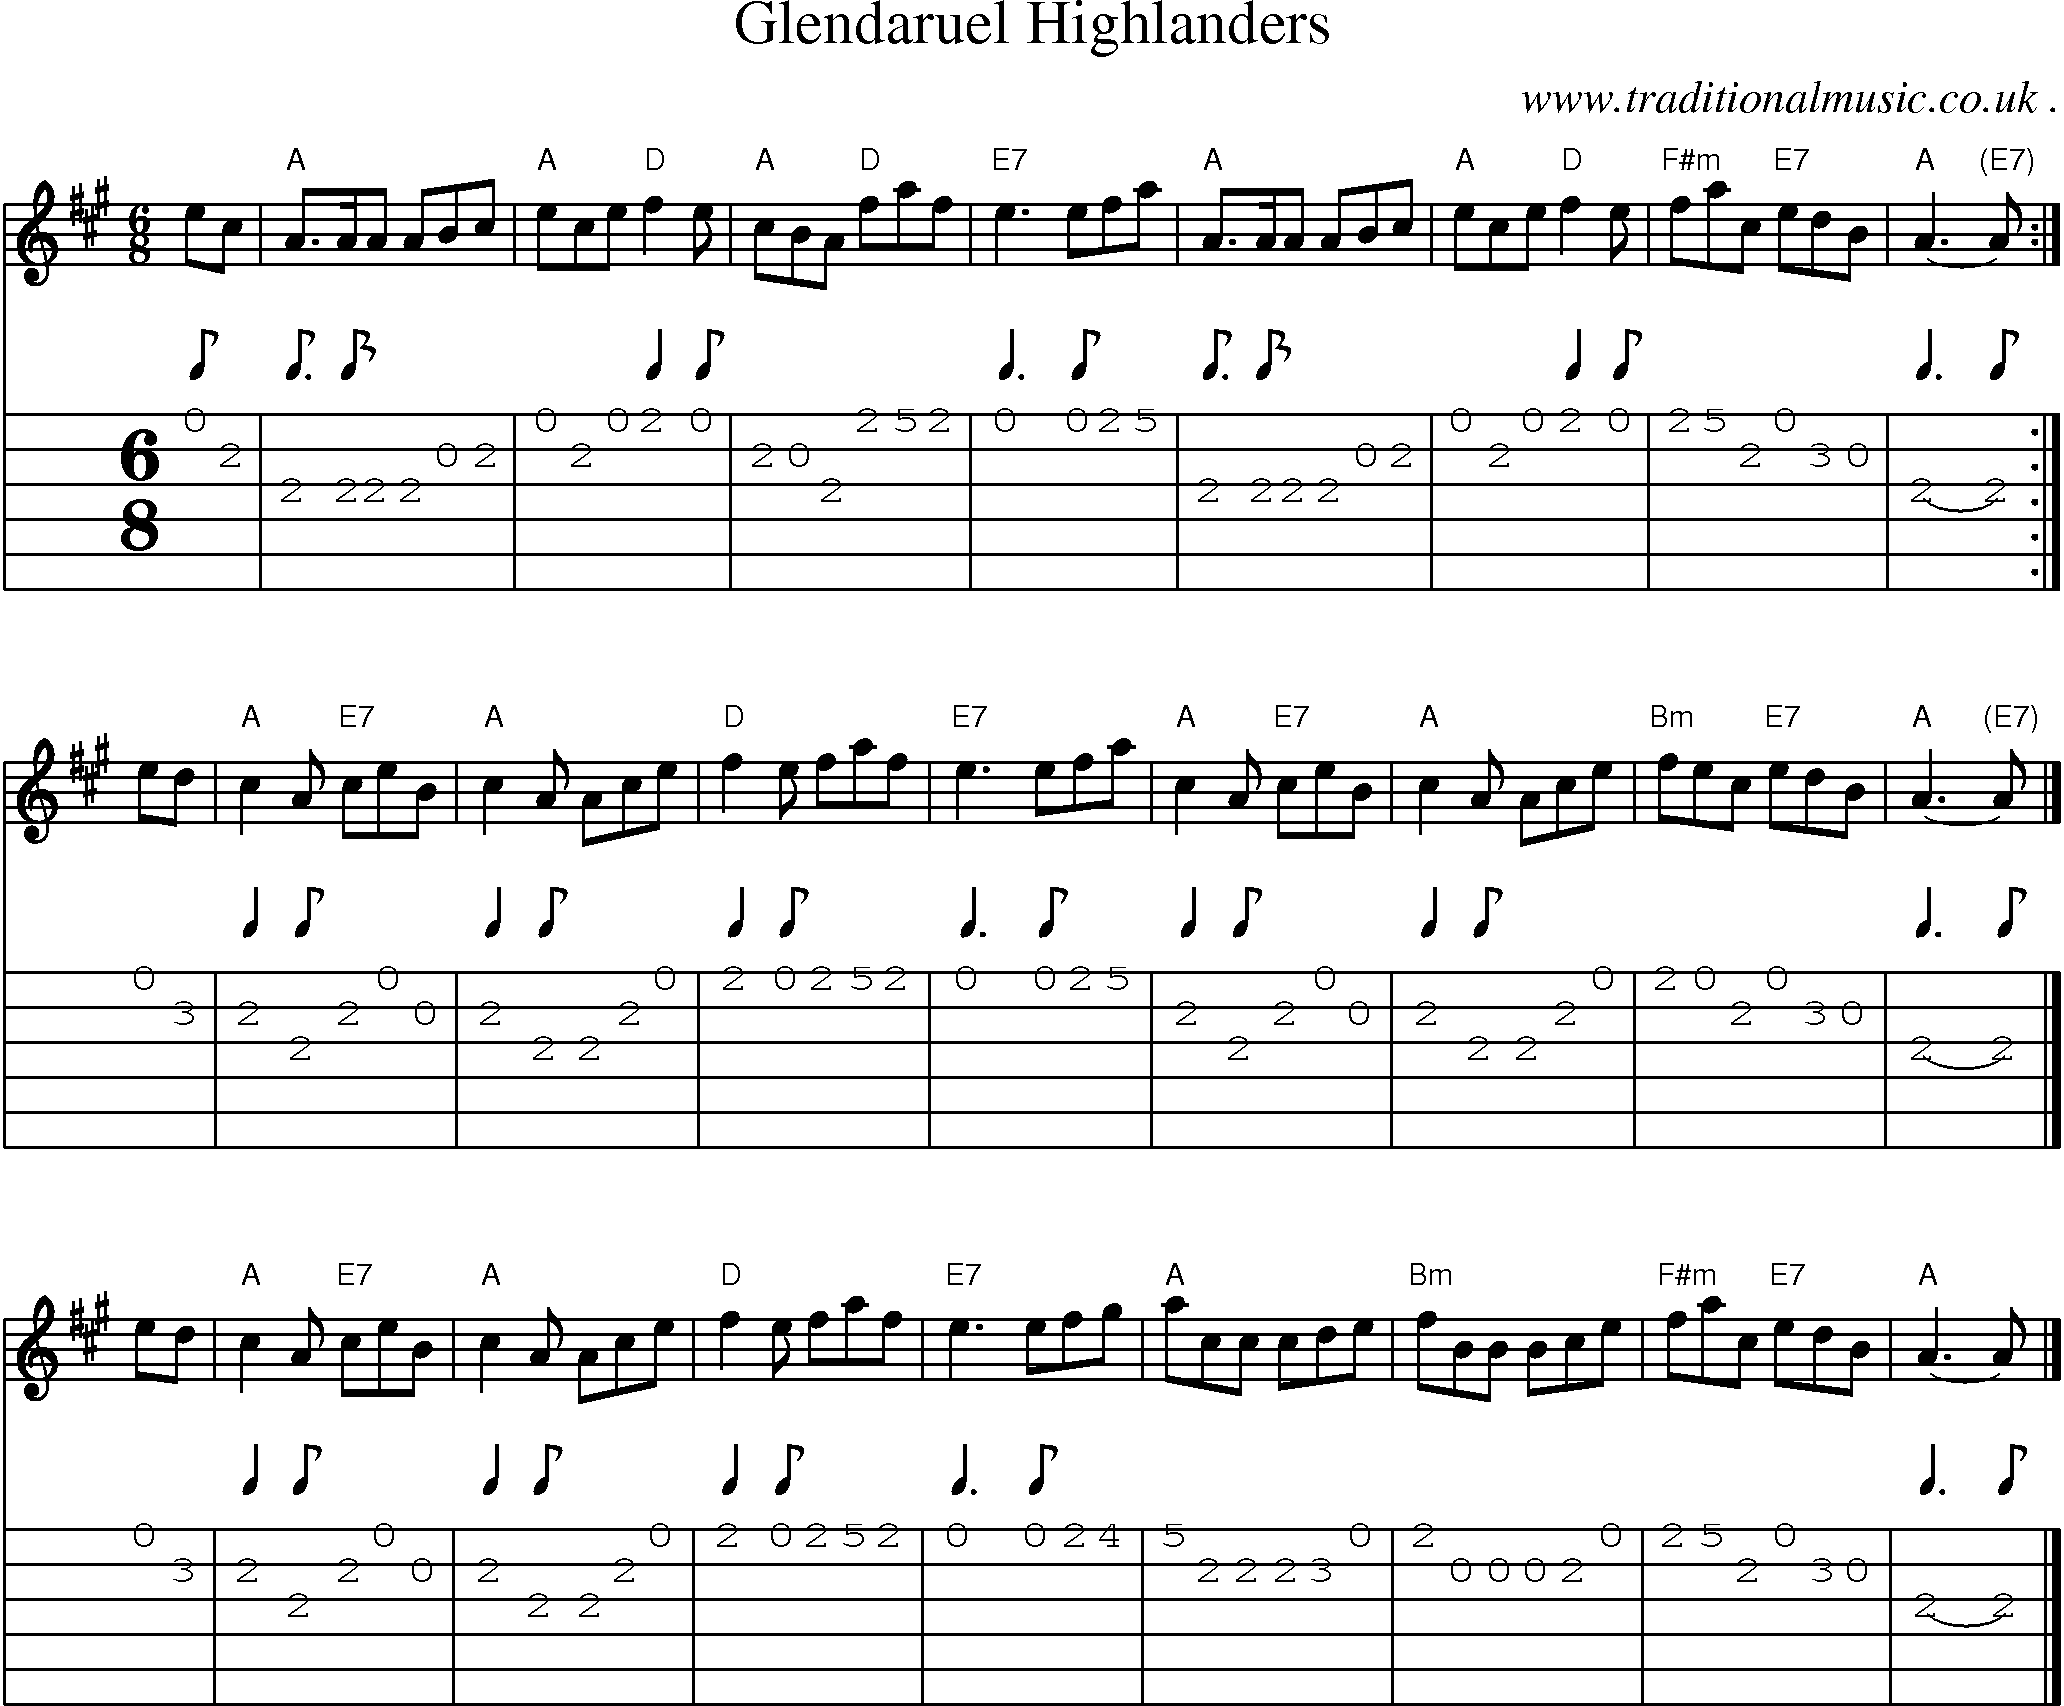 Sheet-music  score, Chords and Guitar Tabs for Glendaruel Highlanders